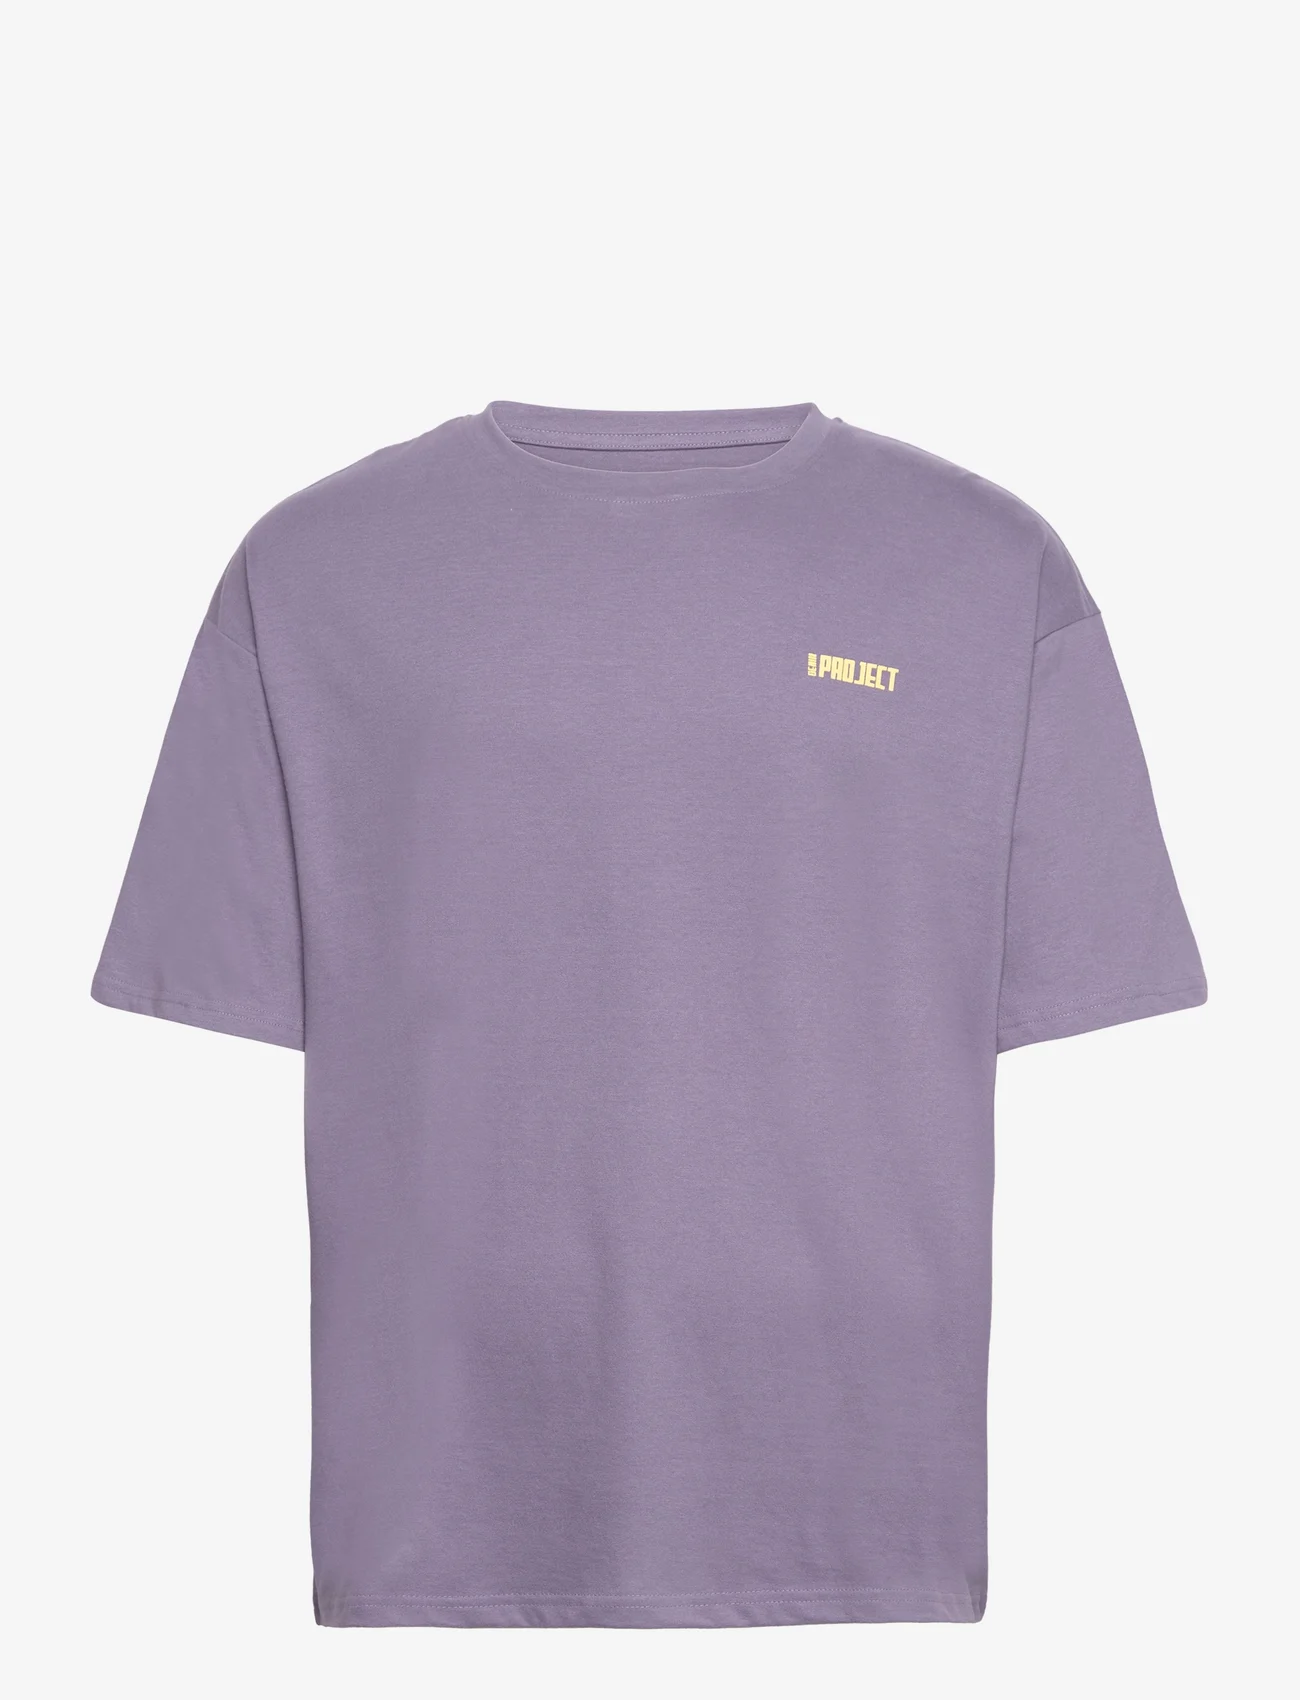 Denim project - DPSignature Print T-Shirt - lägsta priserna - cadet purple - 0